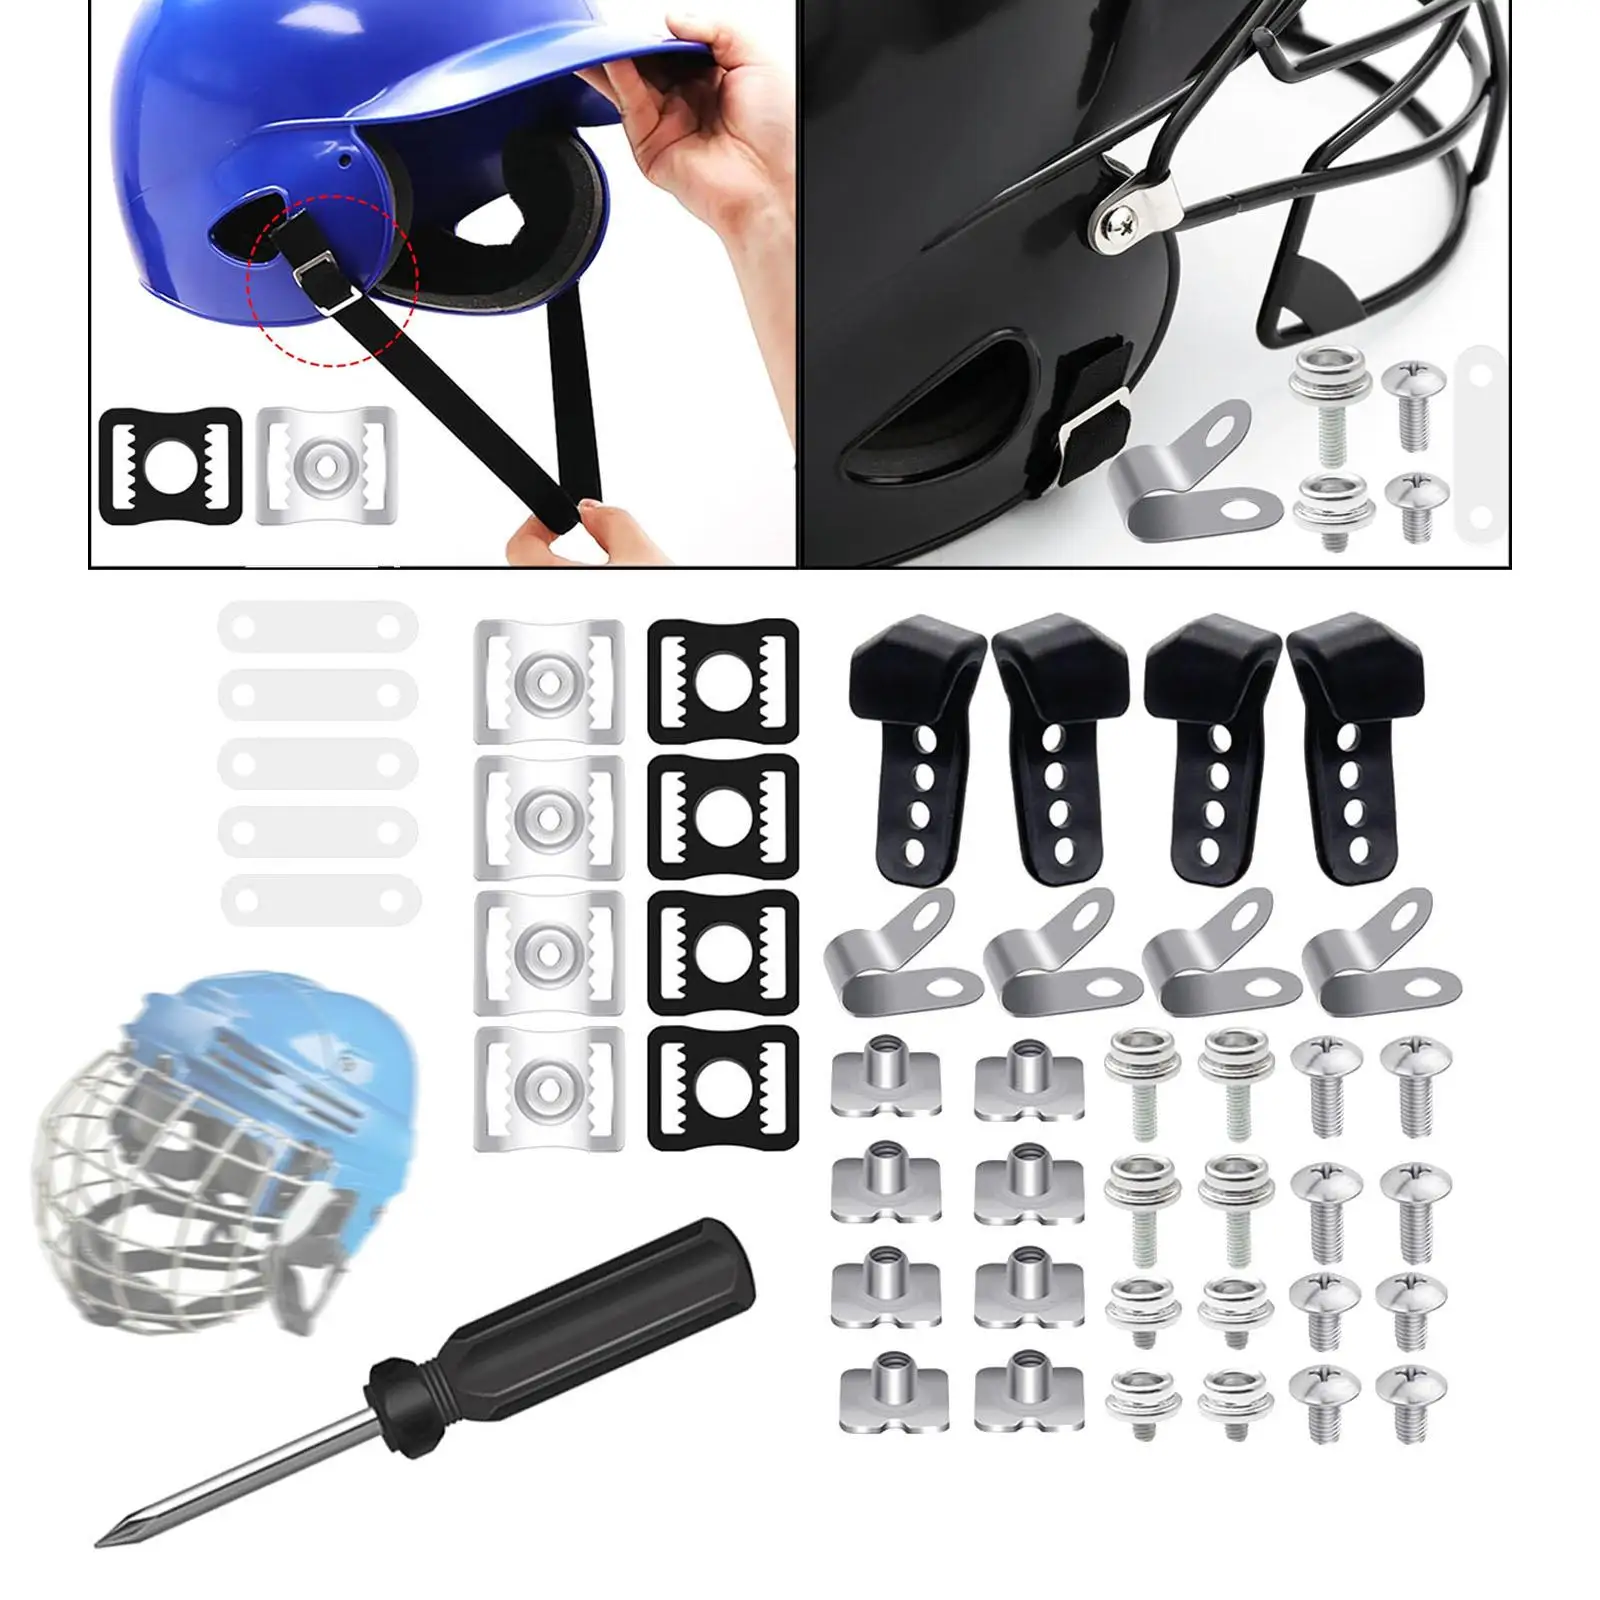 61 Pcs Football Helmet Repair Kit Back up Hardwares Hockey Equipment Spare Parts Fixings for Hockey Football Baseball Softball